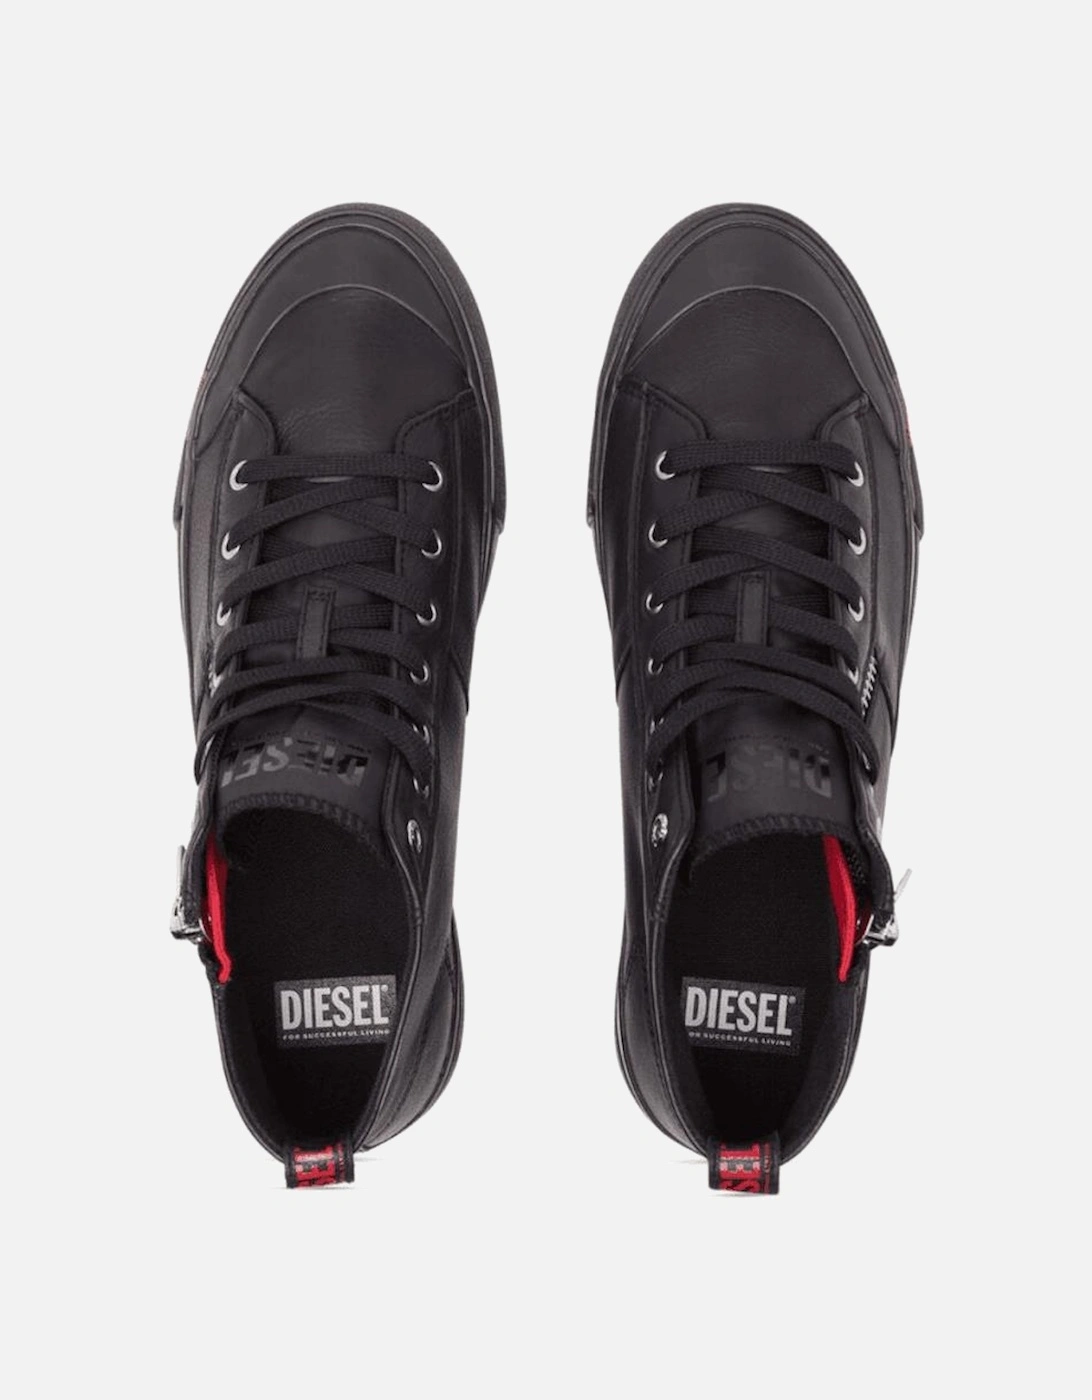 S-ATHOS Zip Leather High Top Black Sneaker